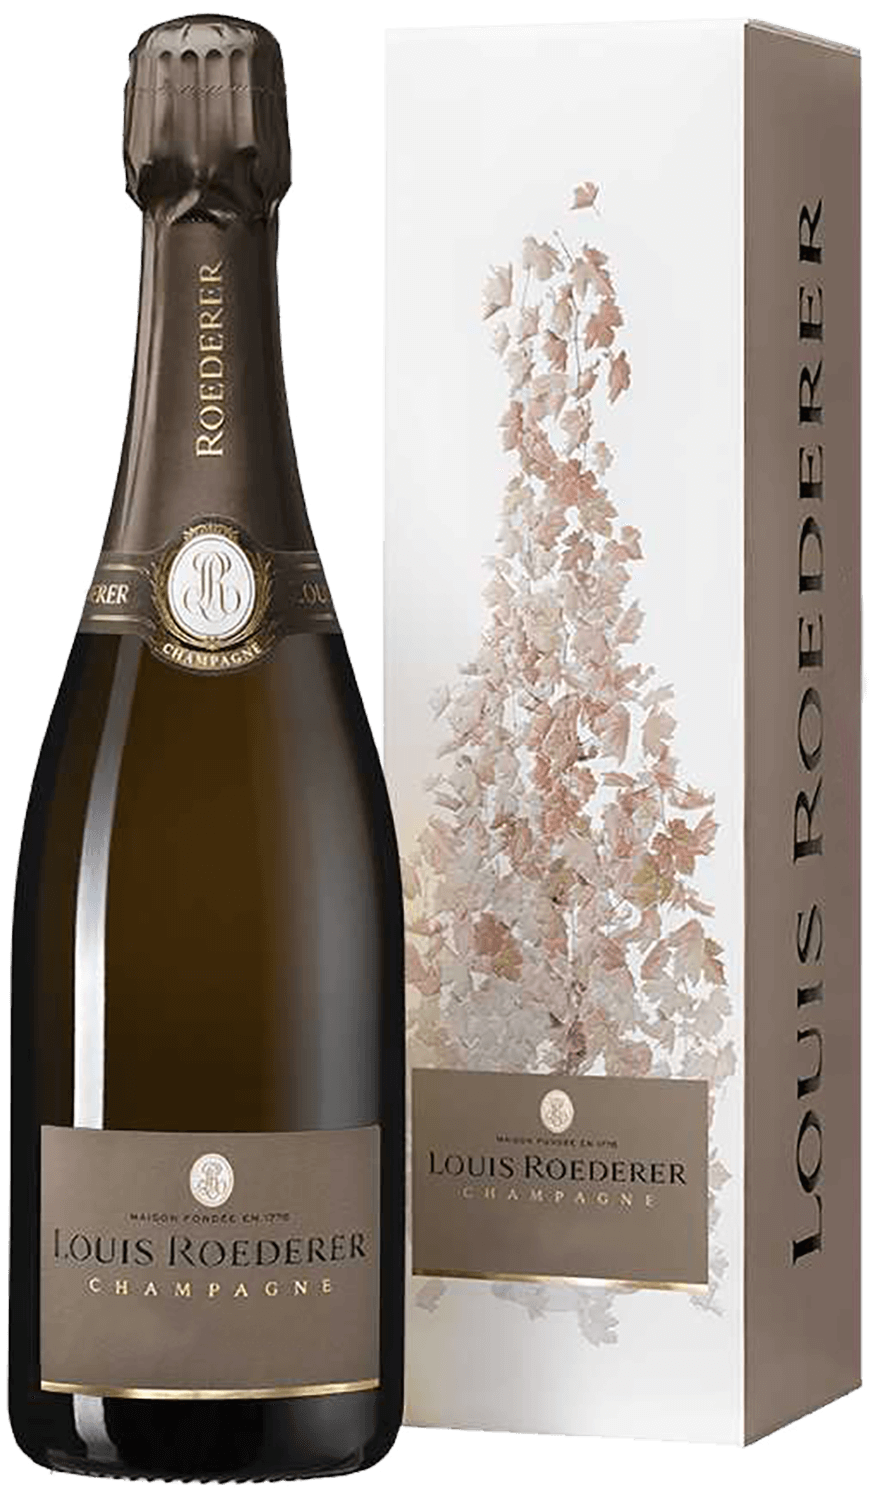 Vintage Brut Champagne AOC Louis Roederer (gift box)